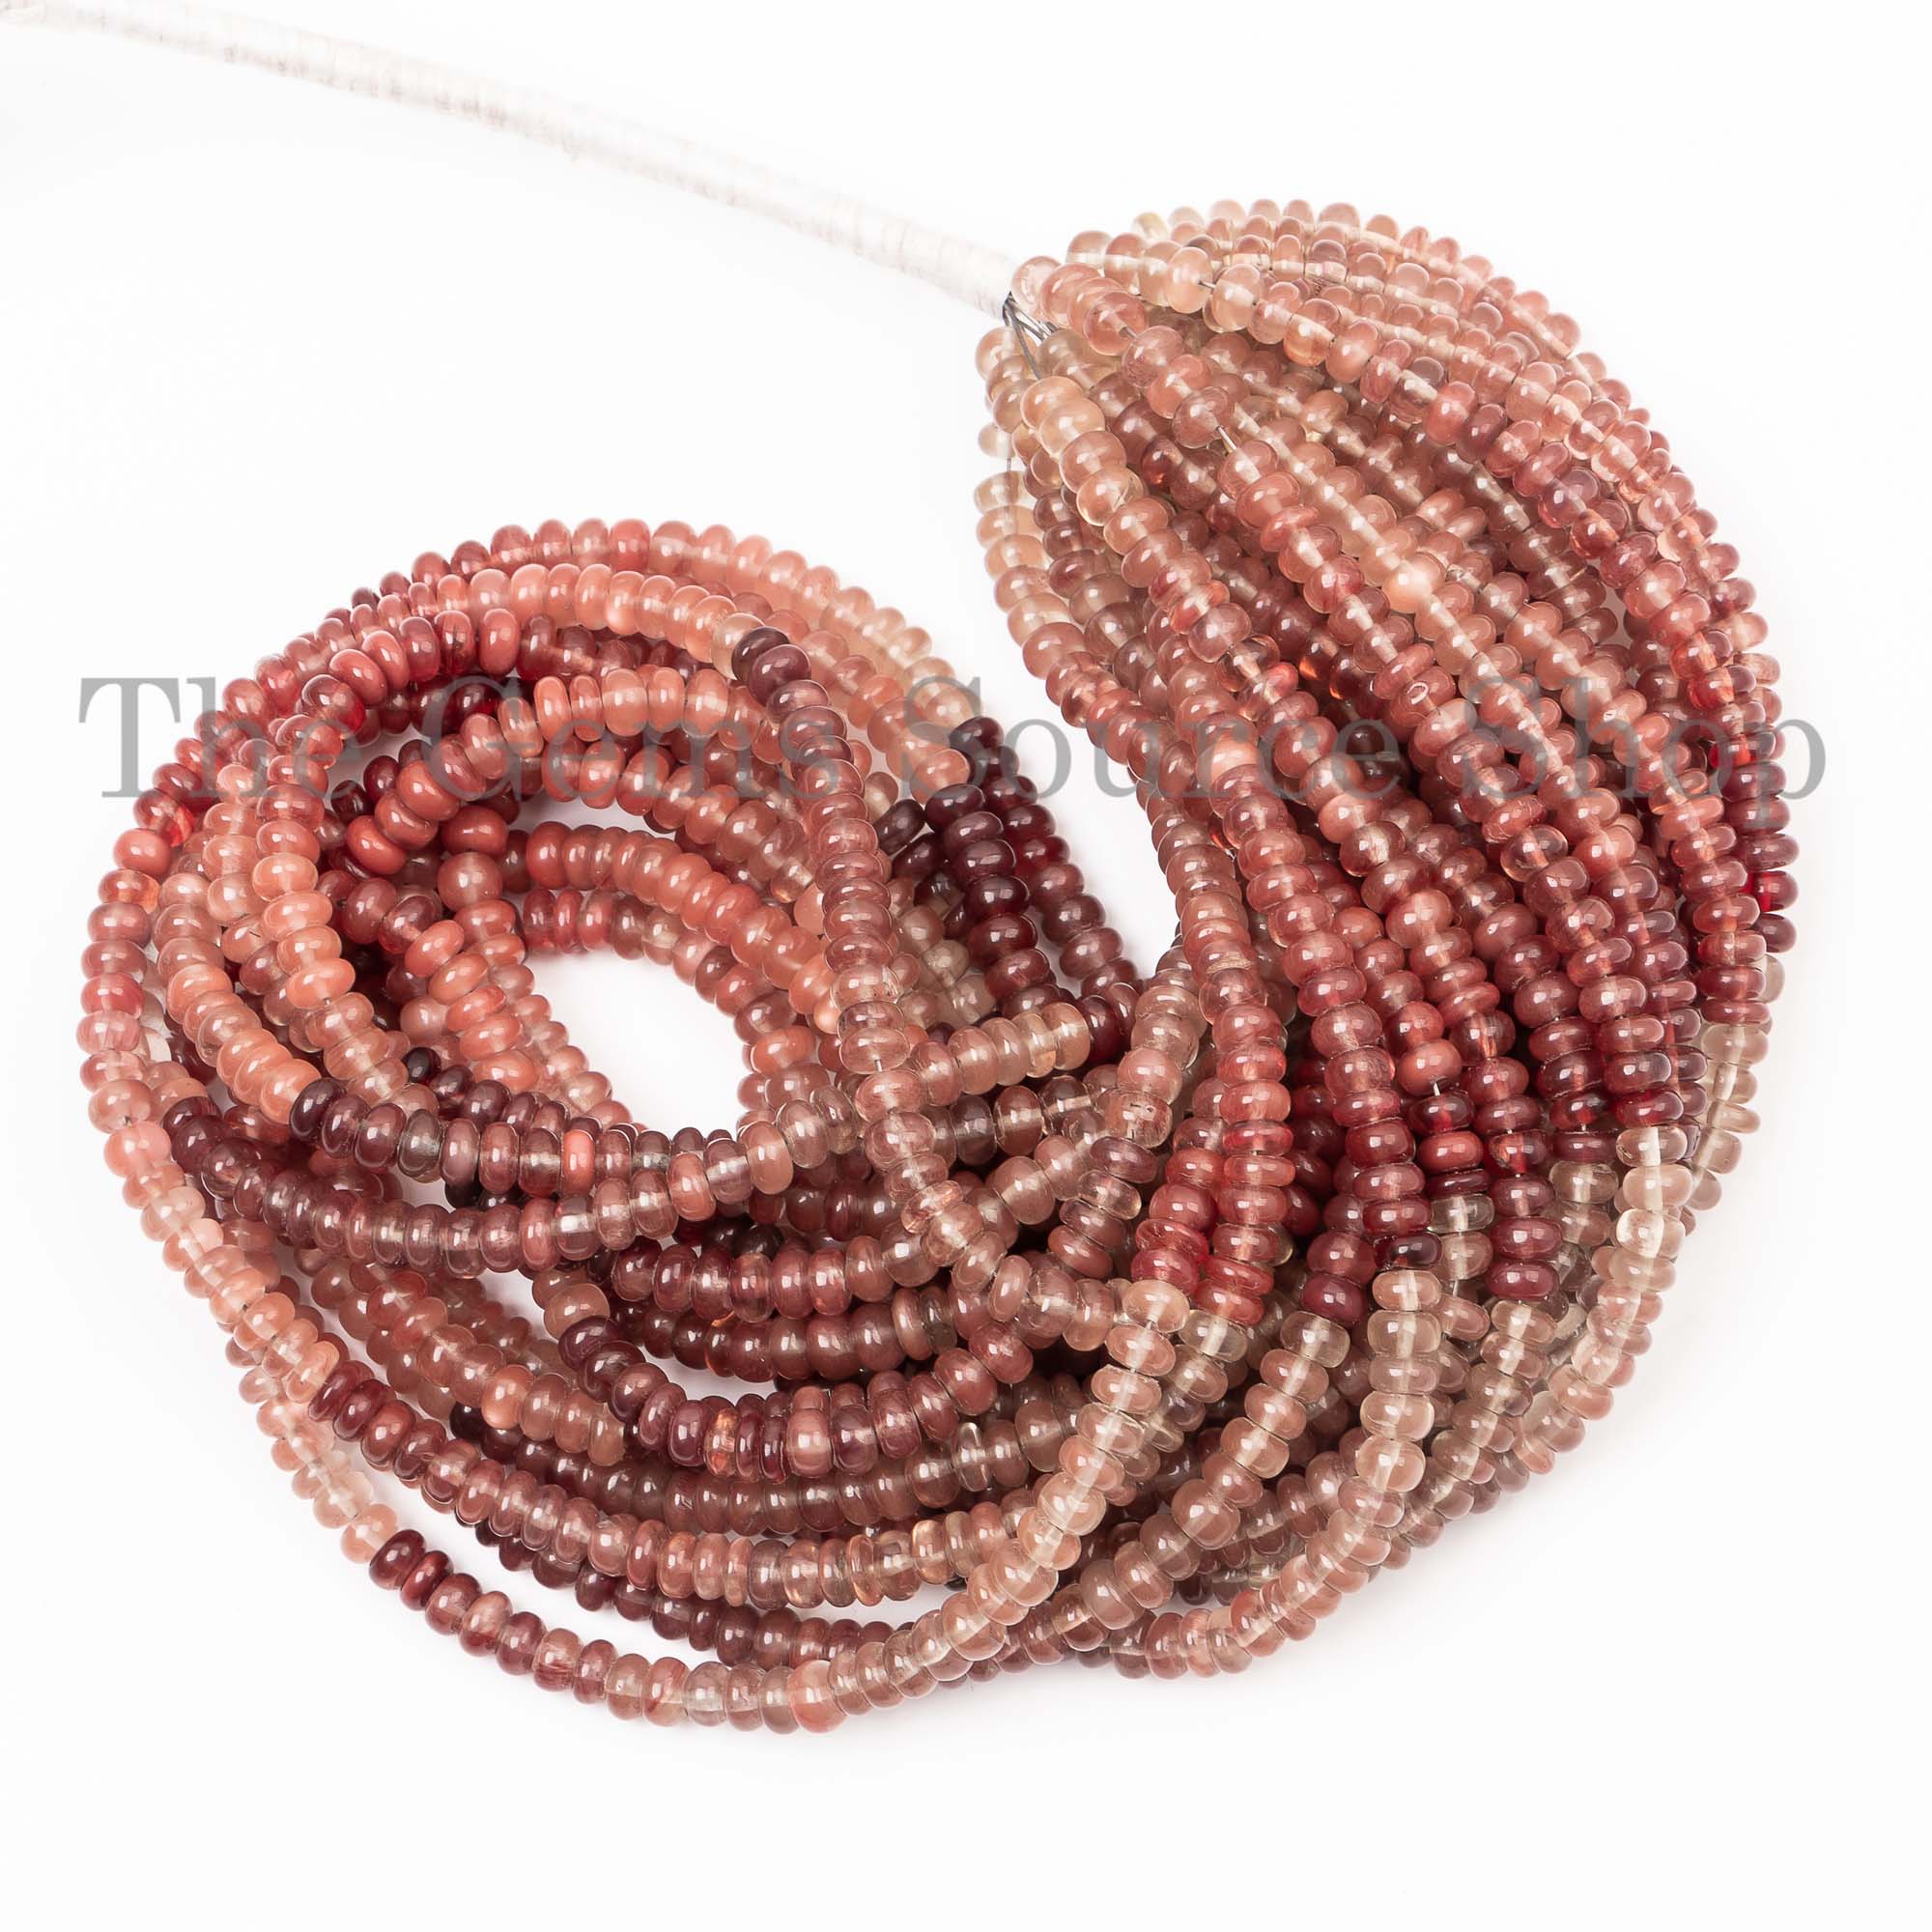 Andesine Labradorite Beads, Labradorite Smooth Rondelle Beads, Andesine Beads, Plain Labradorite Beads